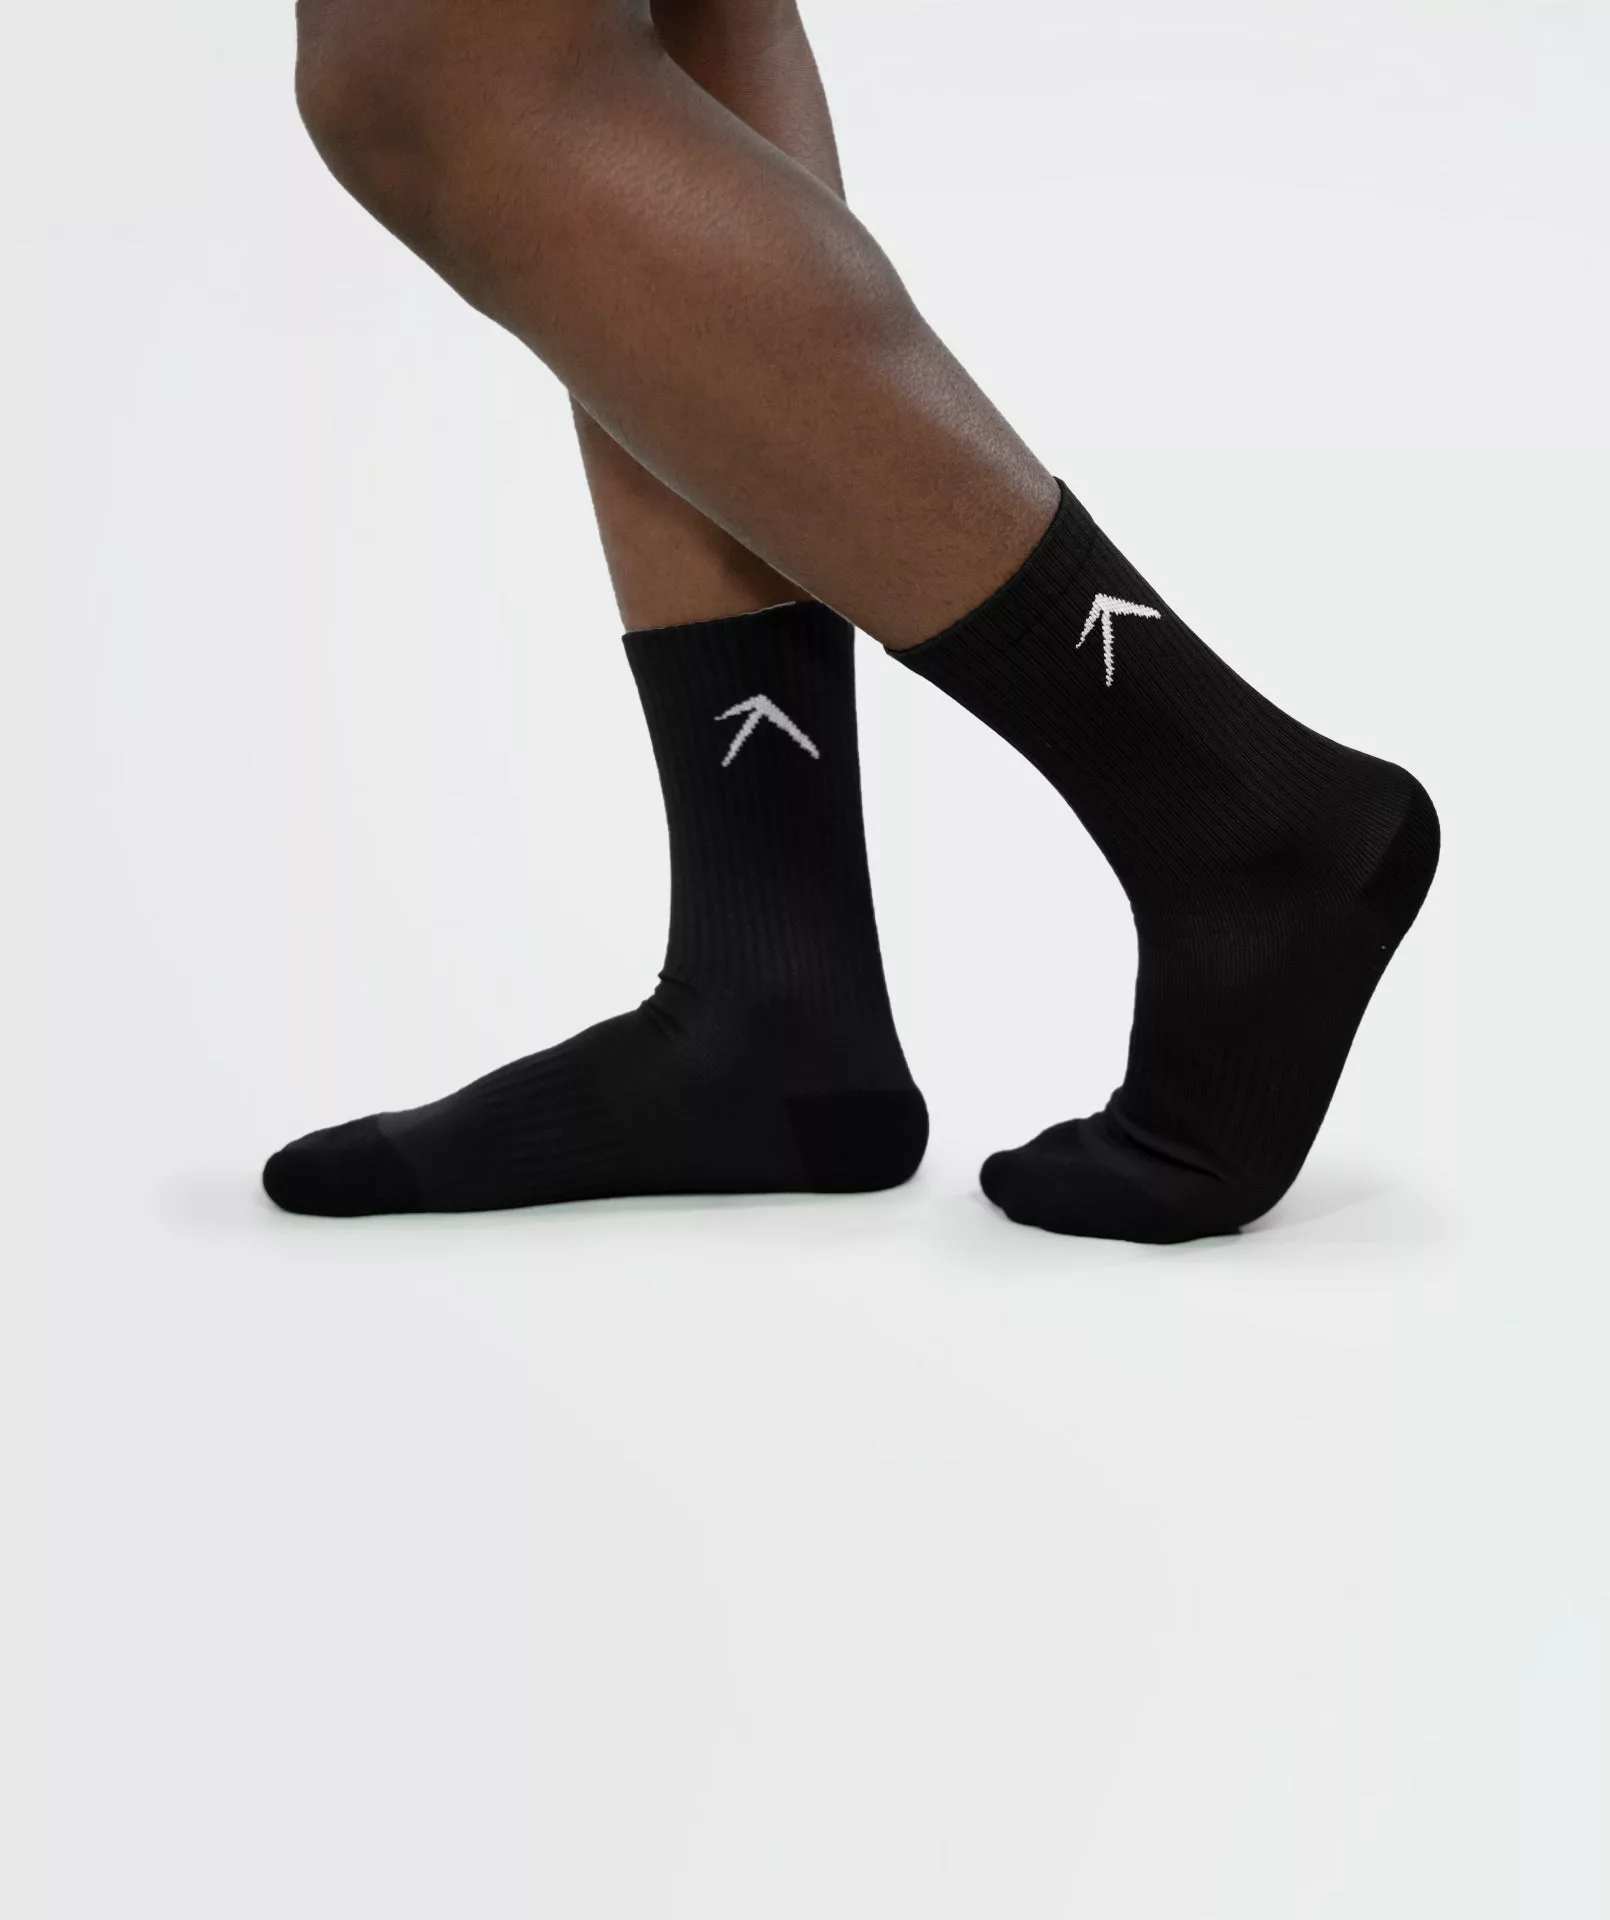 Unisex Crew Dry Touch Socks - Pack of 3 Black Main Image